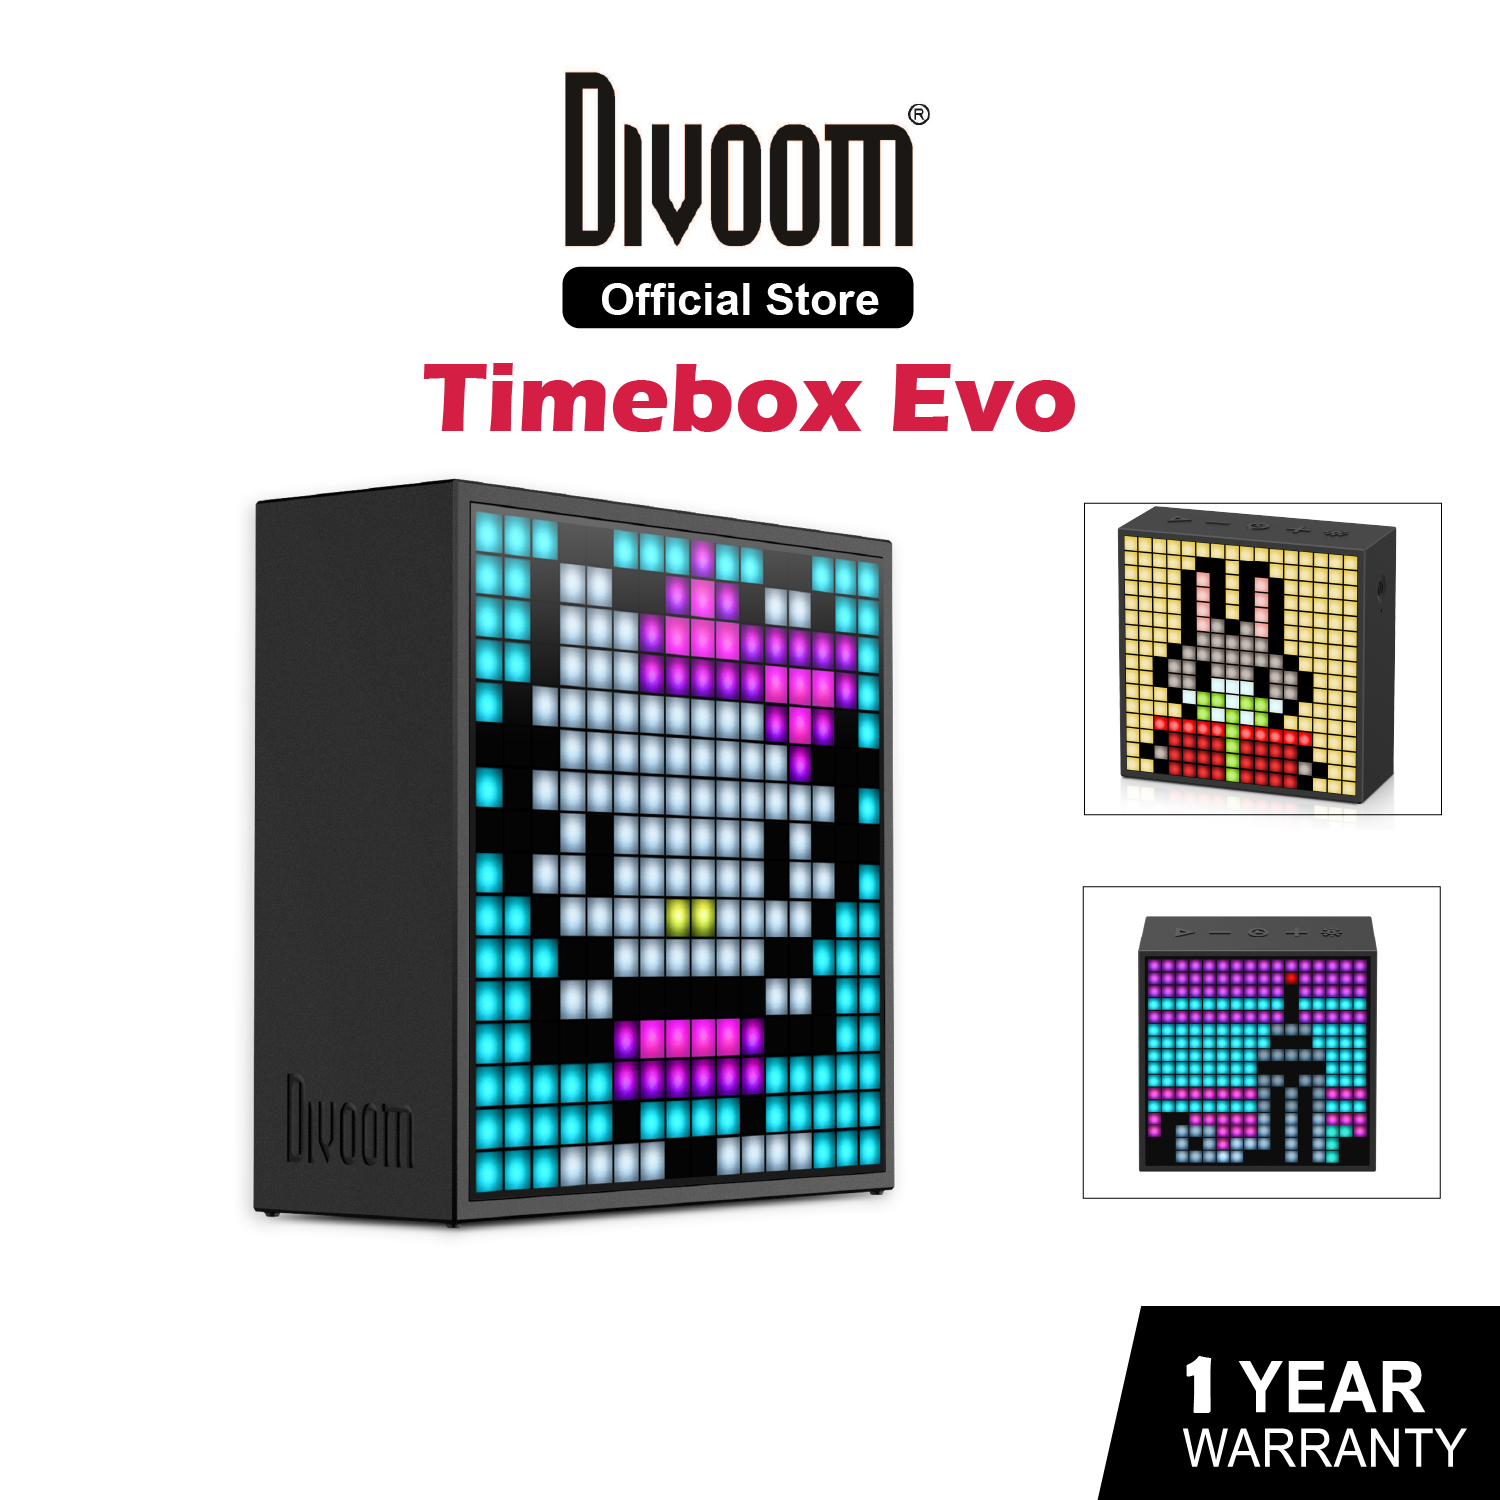 Divoom Times Gate - Pixel Art Informative LED Display, 1 Year Warranty